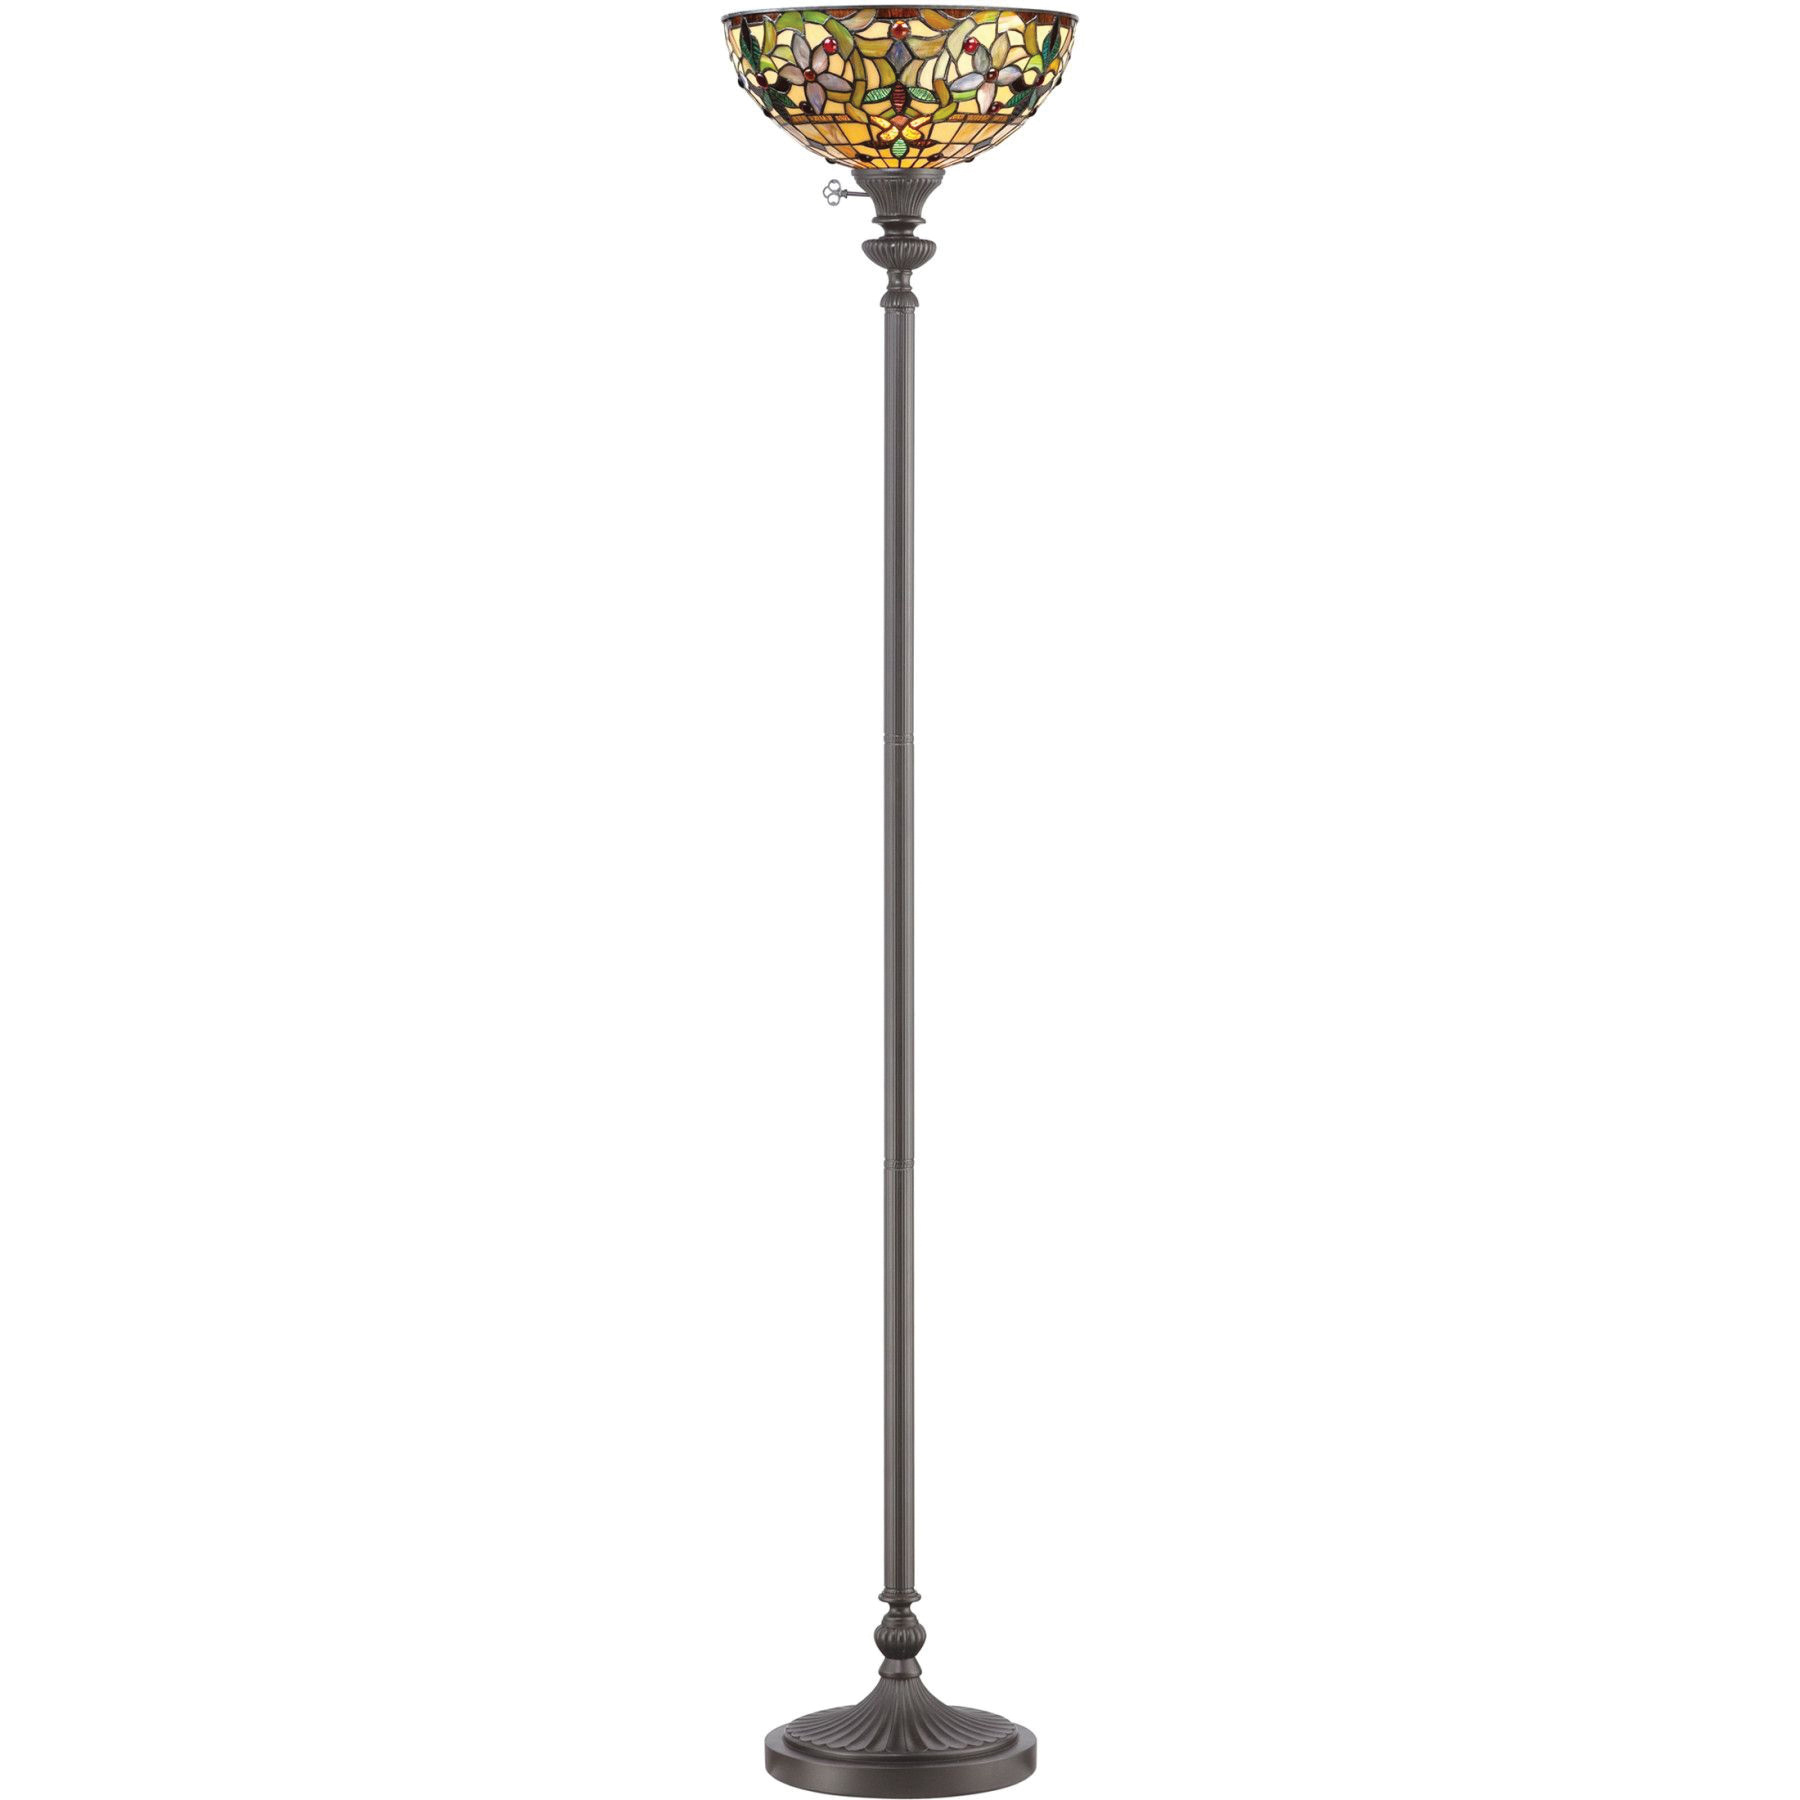 Quoizel Lighting Tf878uvb Portable Torchiere Floor Lamp 100 Watt 120 Volt Ac Vintage Bronze Kami intended for sizing 1800 X 1800